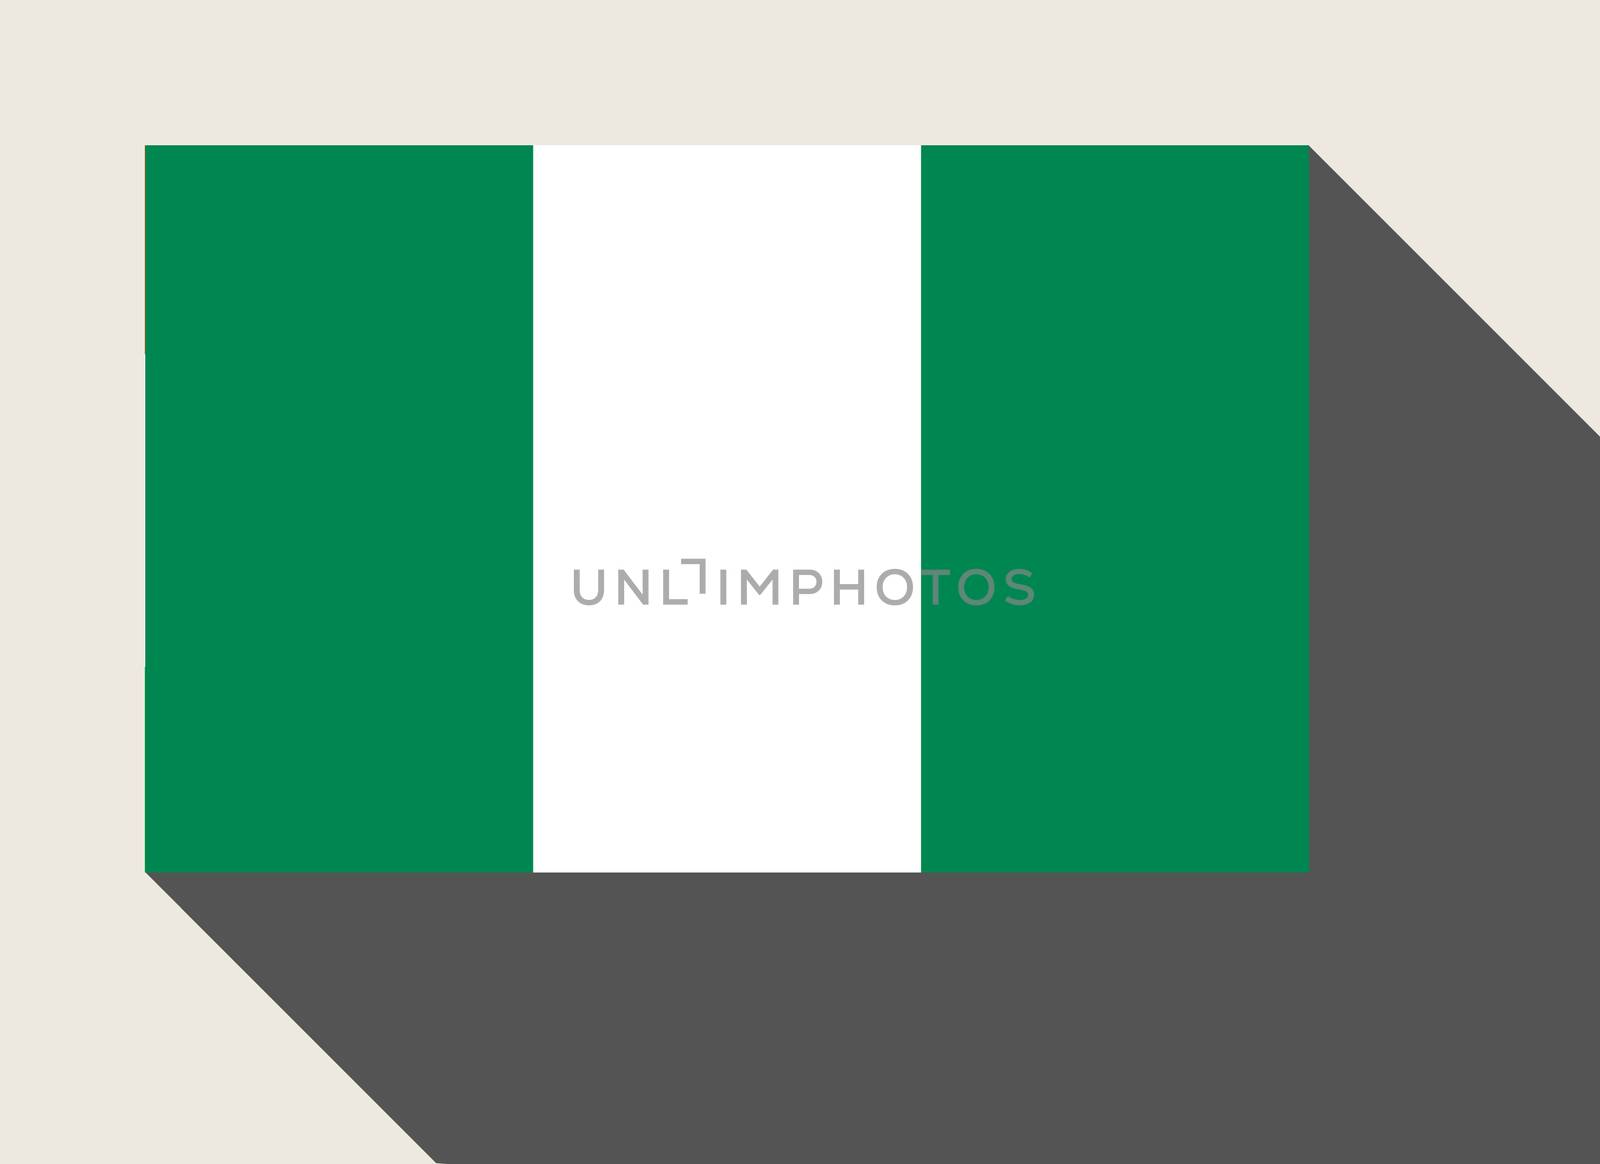 Nigeria flag in flat web design style.